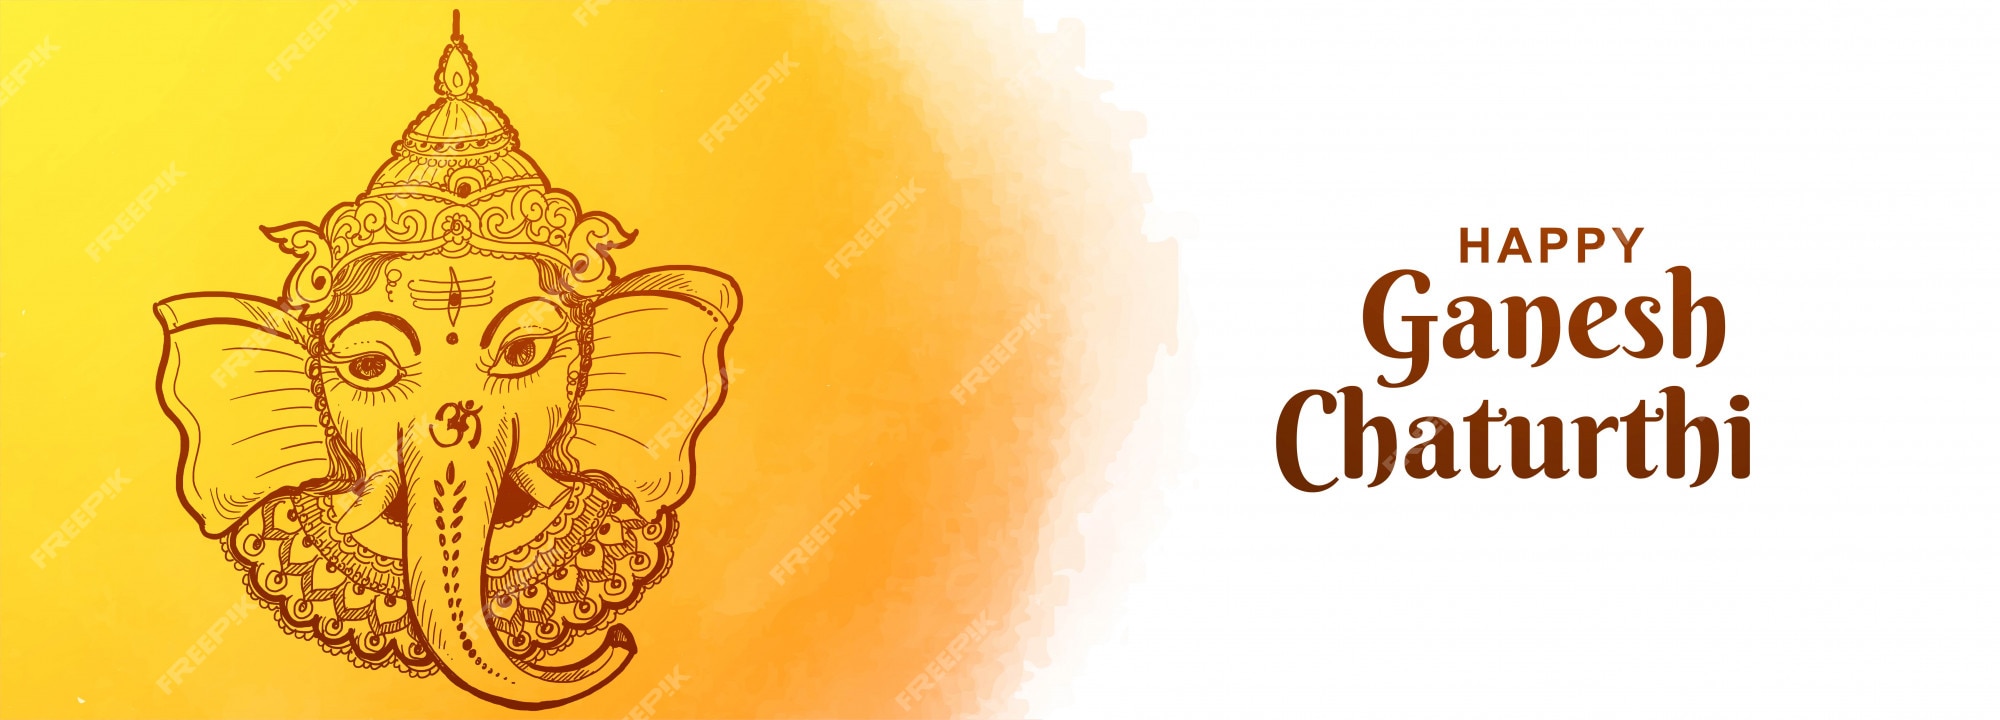 Ganesh Chaturthi Background Images - Free Download on Freepik